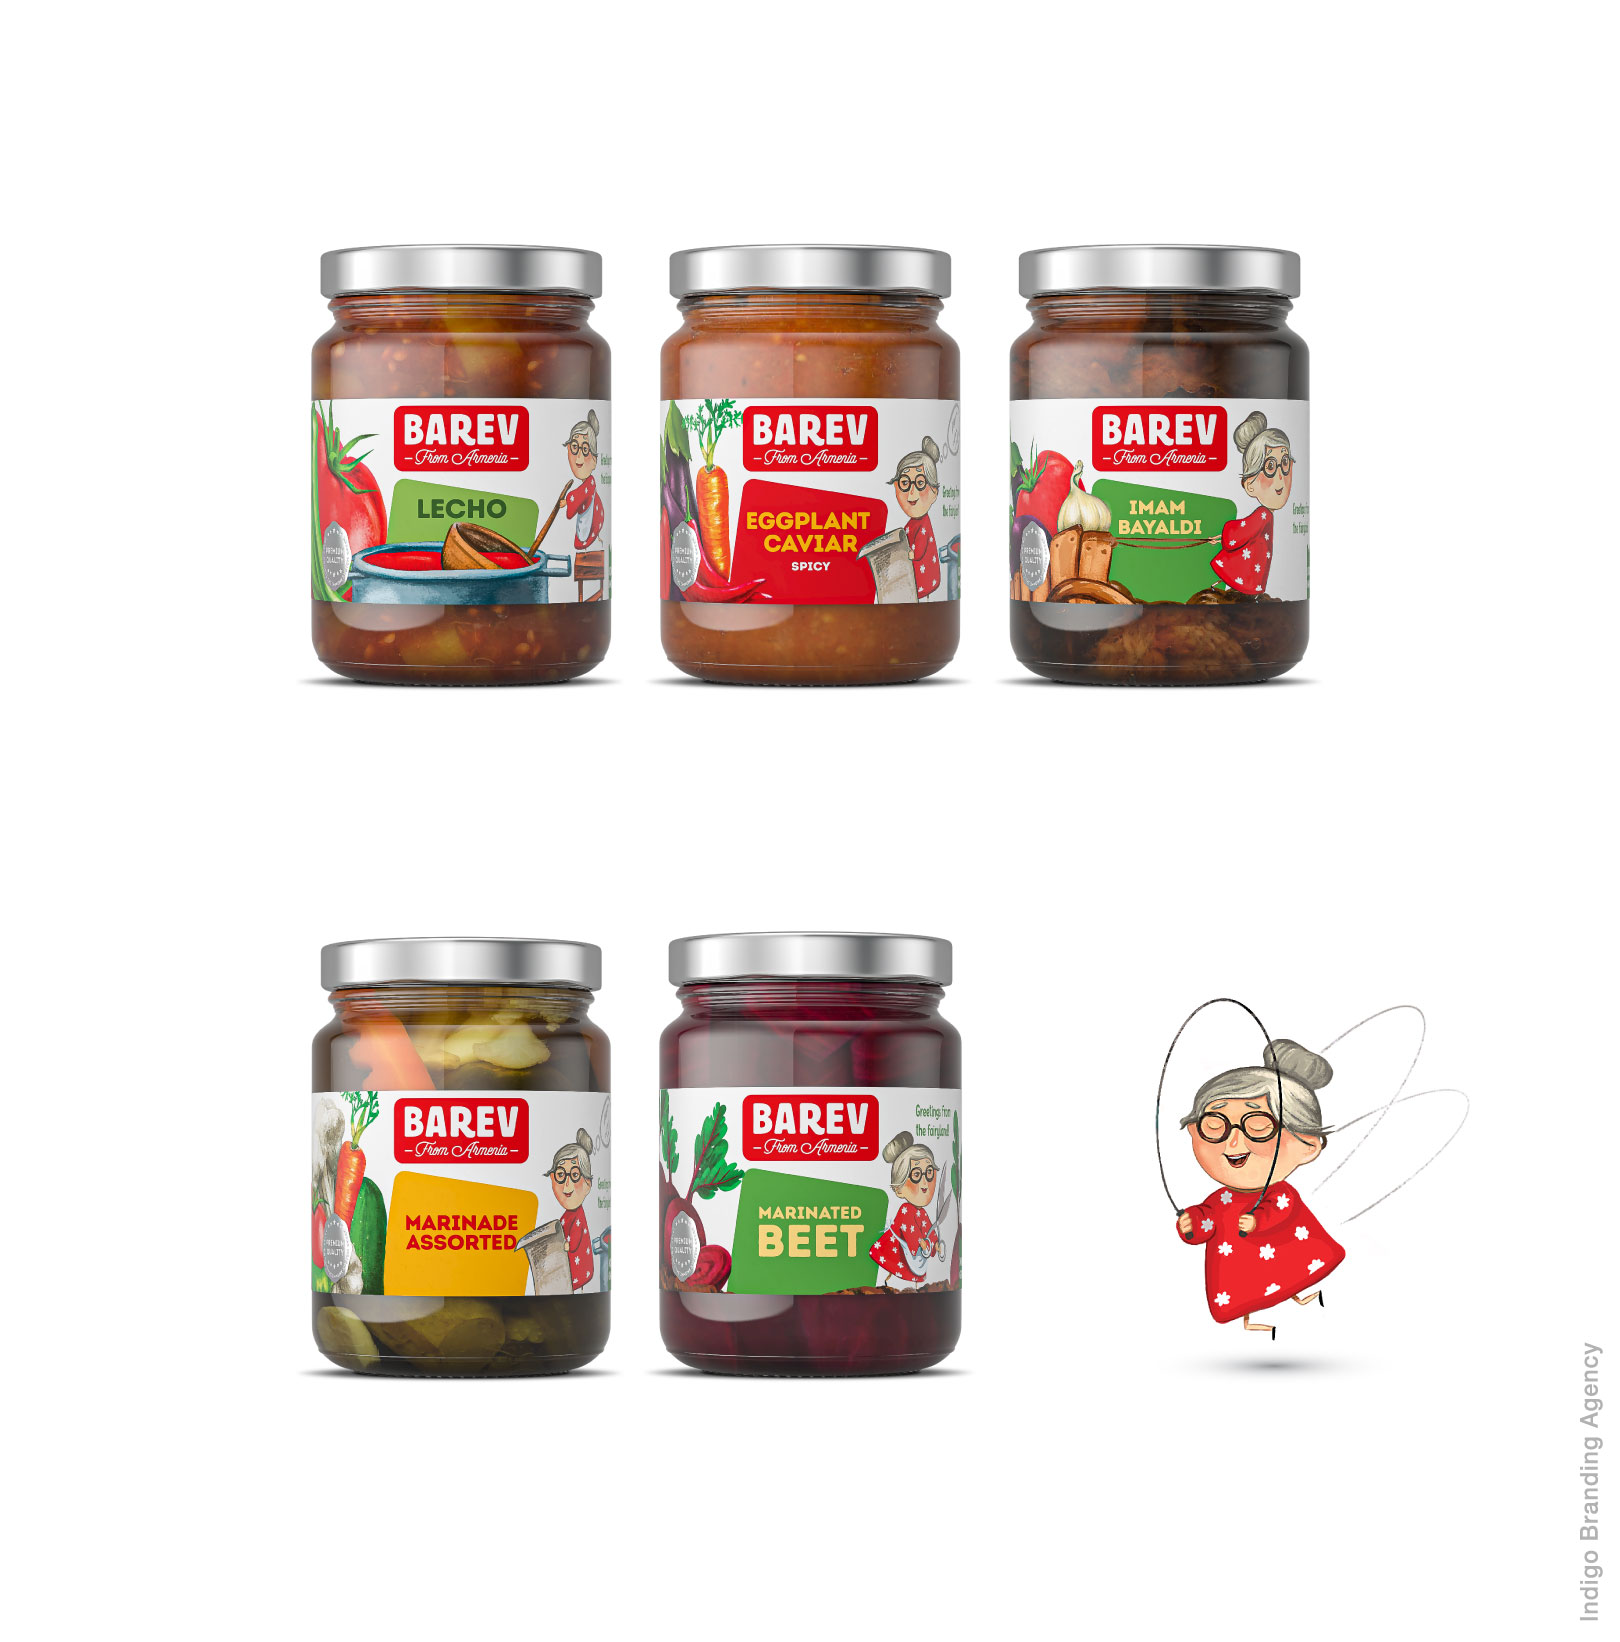 Barev Armenia jams preserves juices branding and packaging design for Hayasy Group by Indigo Branding